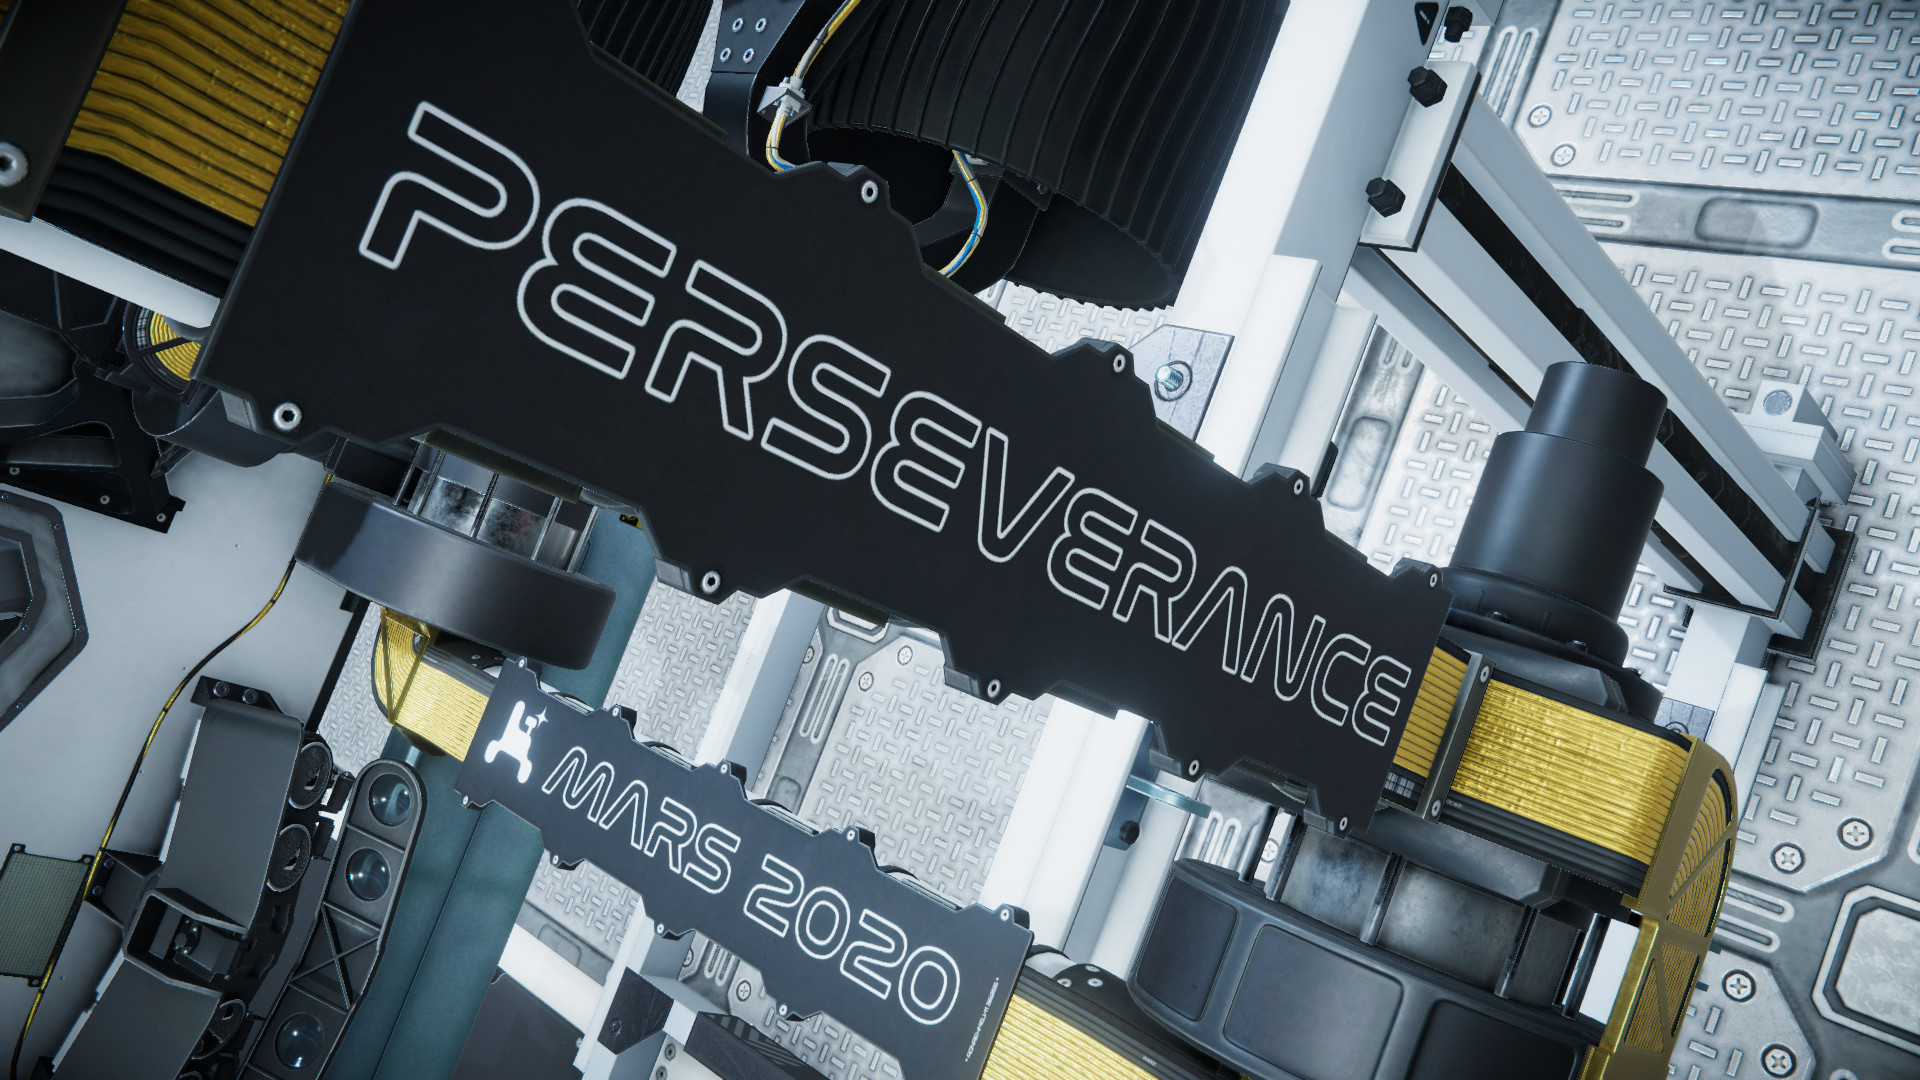 Rover Mechanic Simulator - Perseverance Rover DLC screenshot